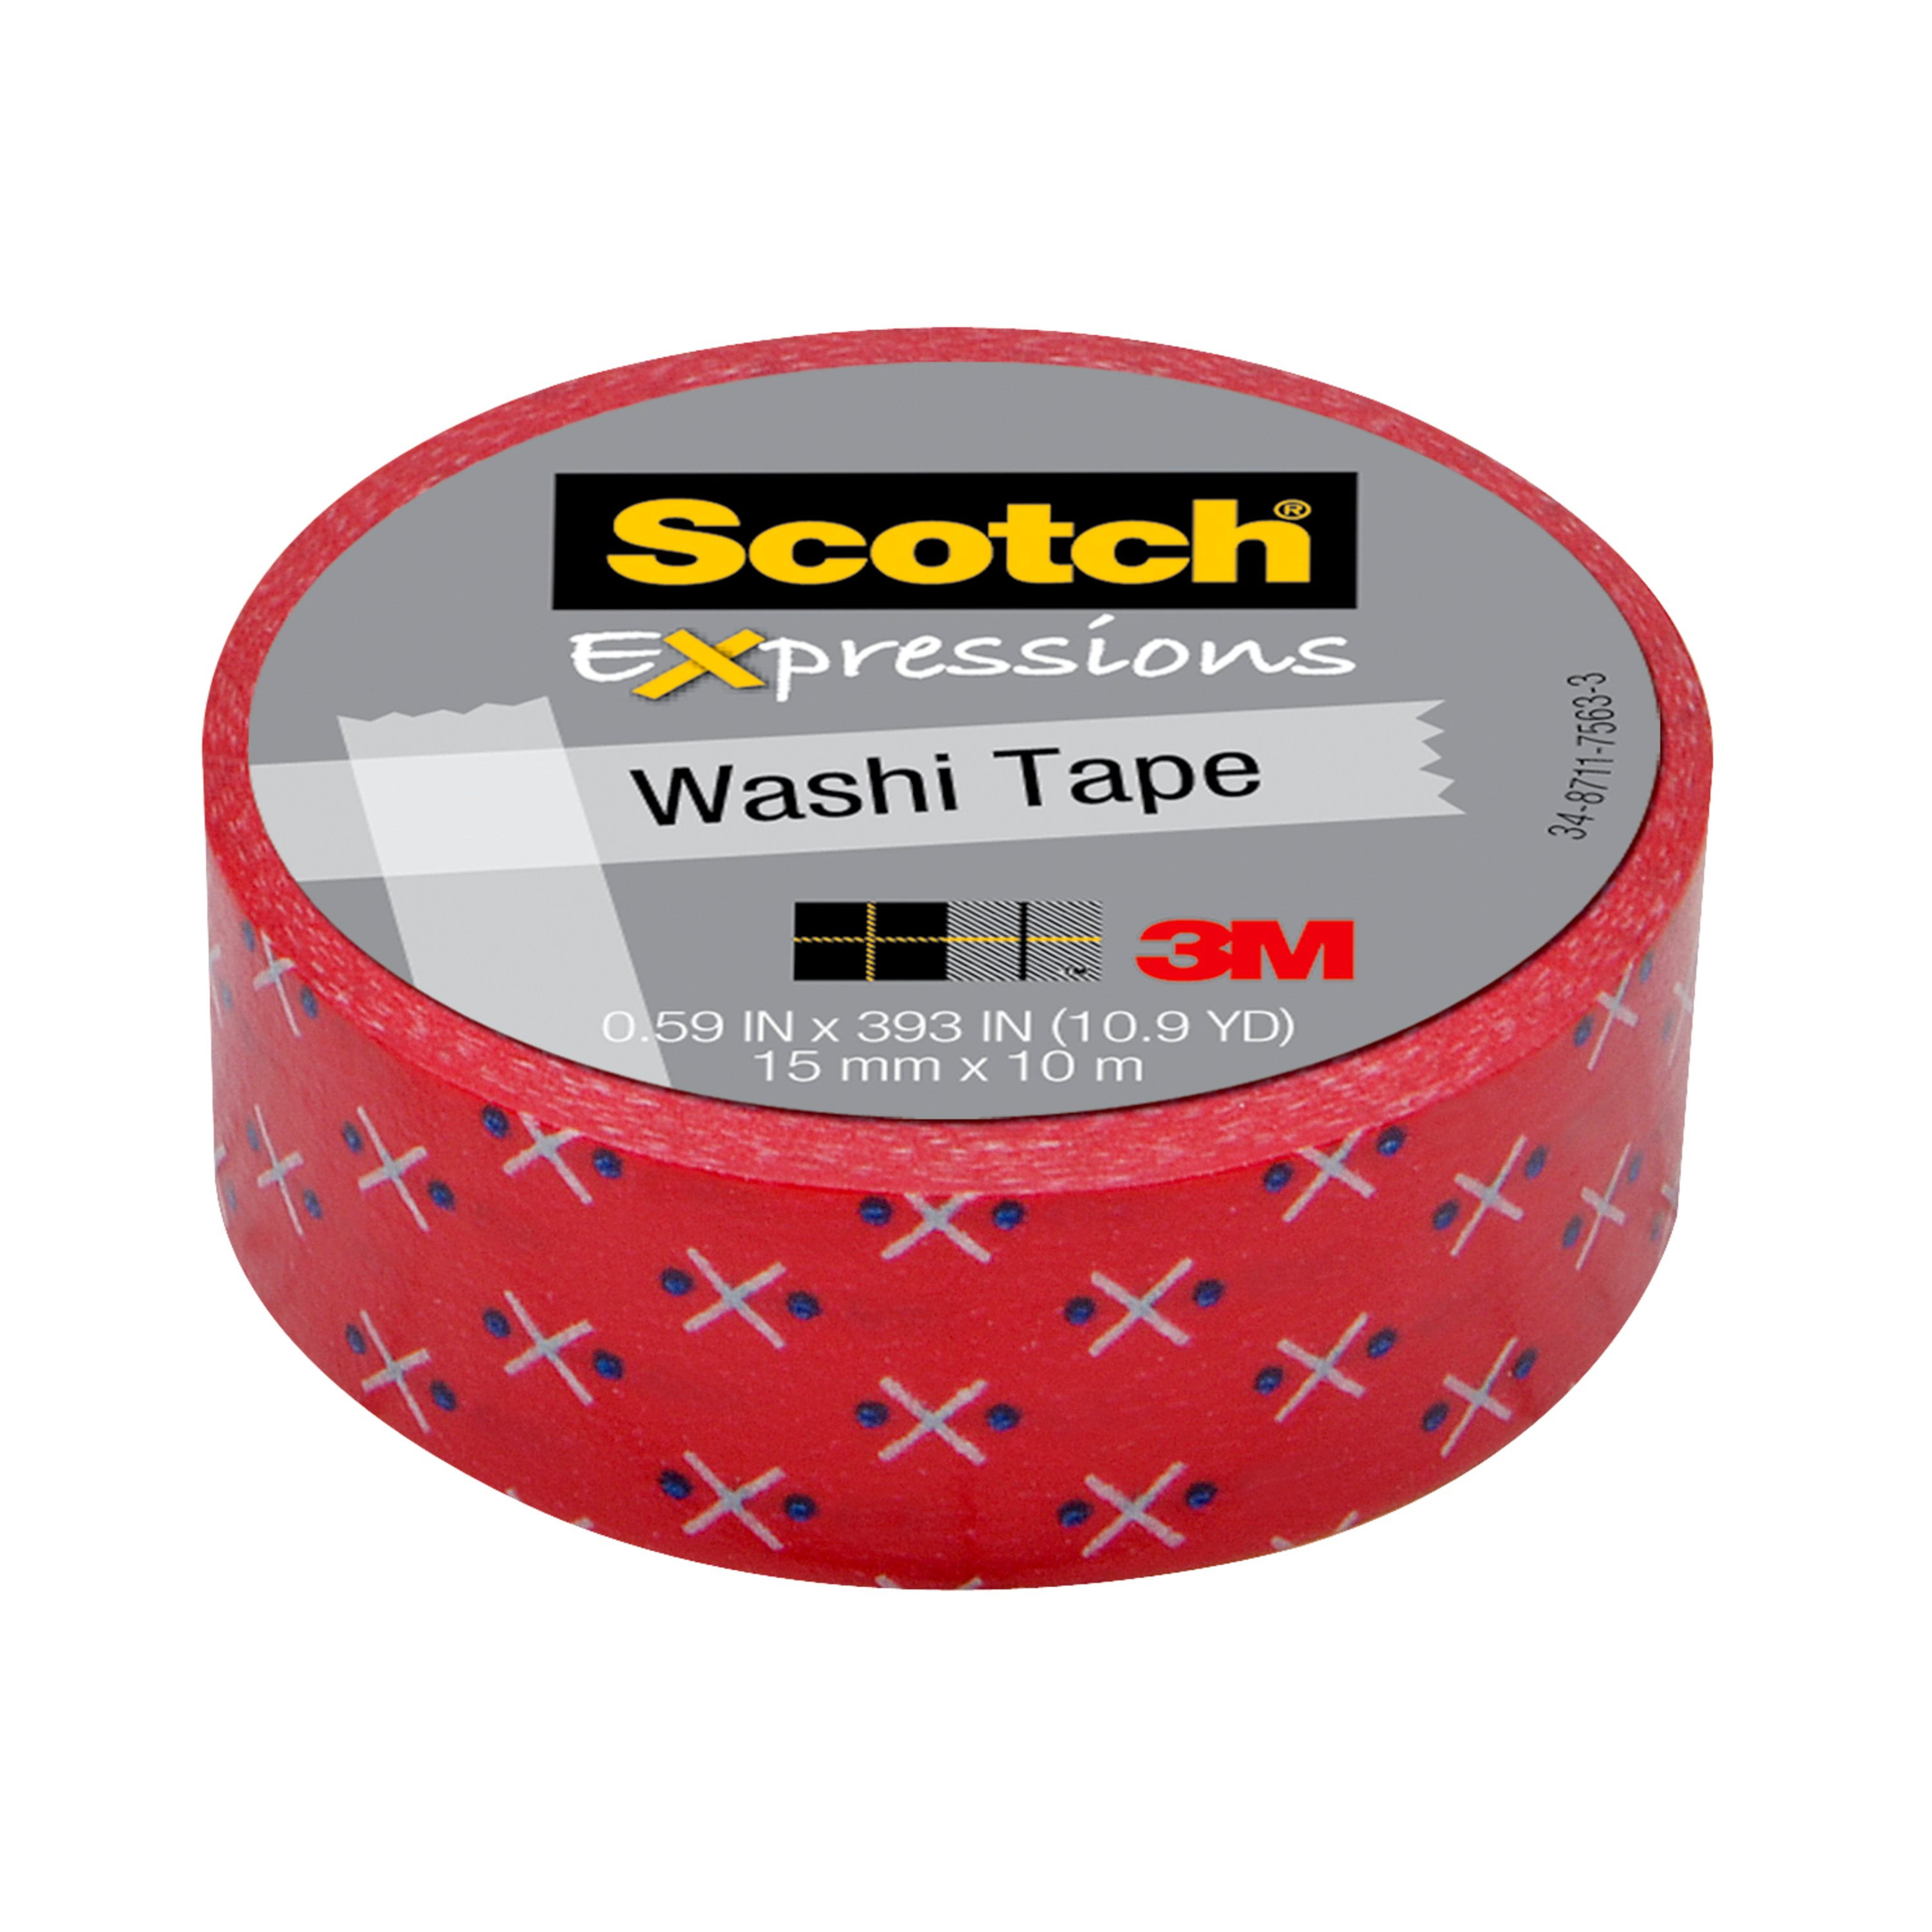 Scotch Expressions Washi Tape, Red Stitch, .59 x 393, 1 Roll